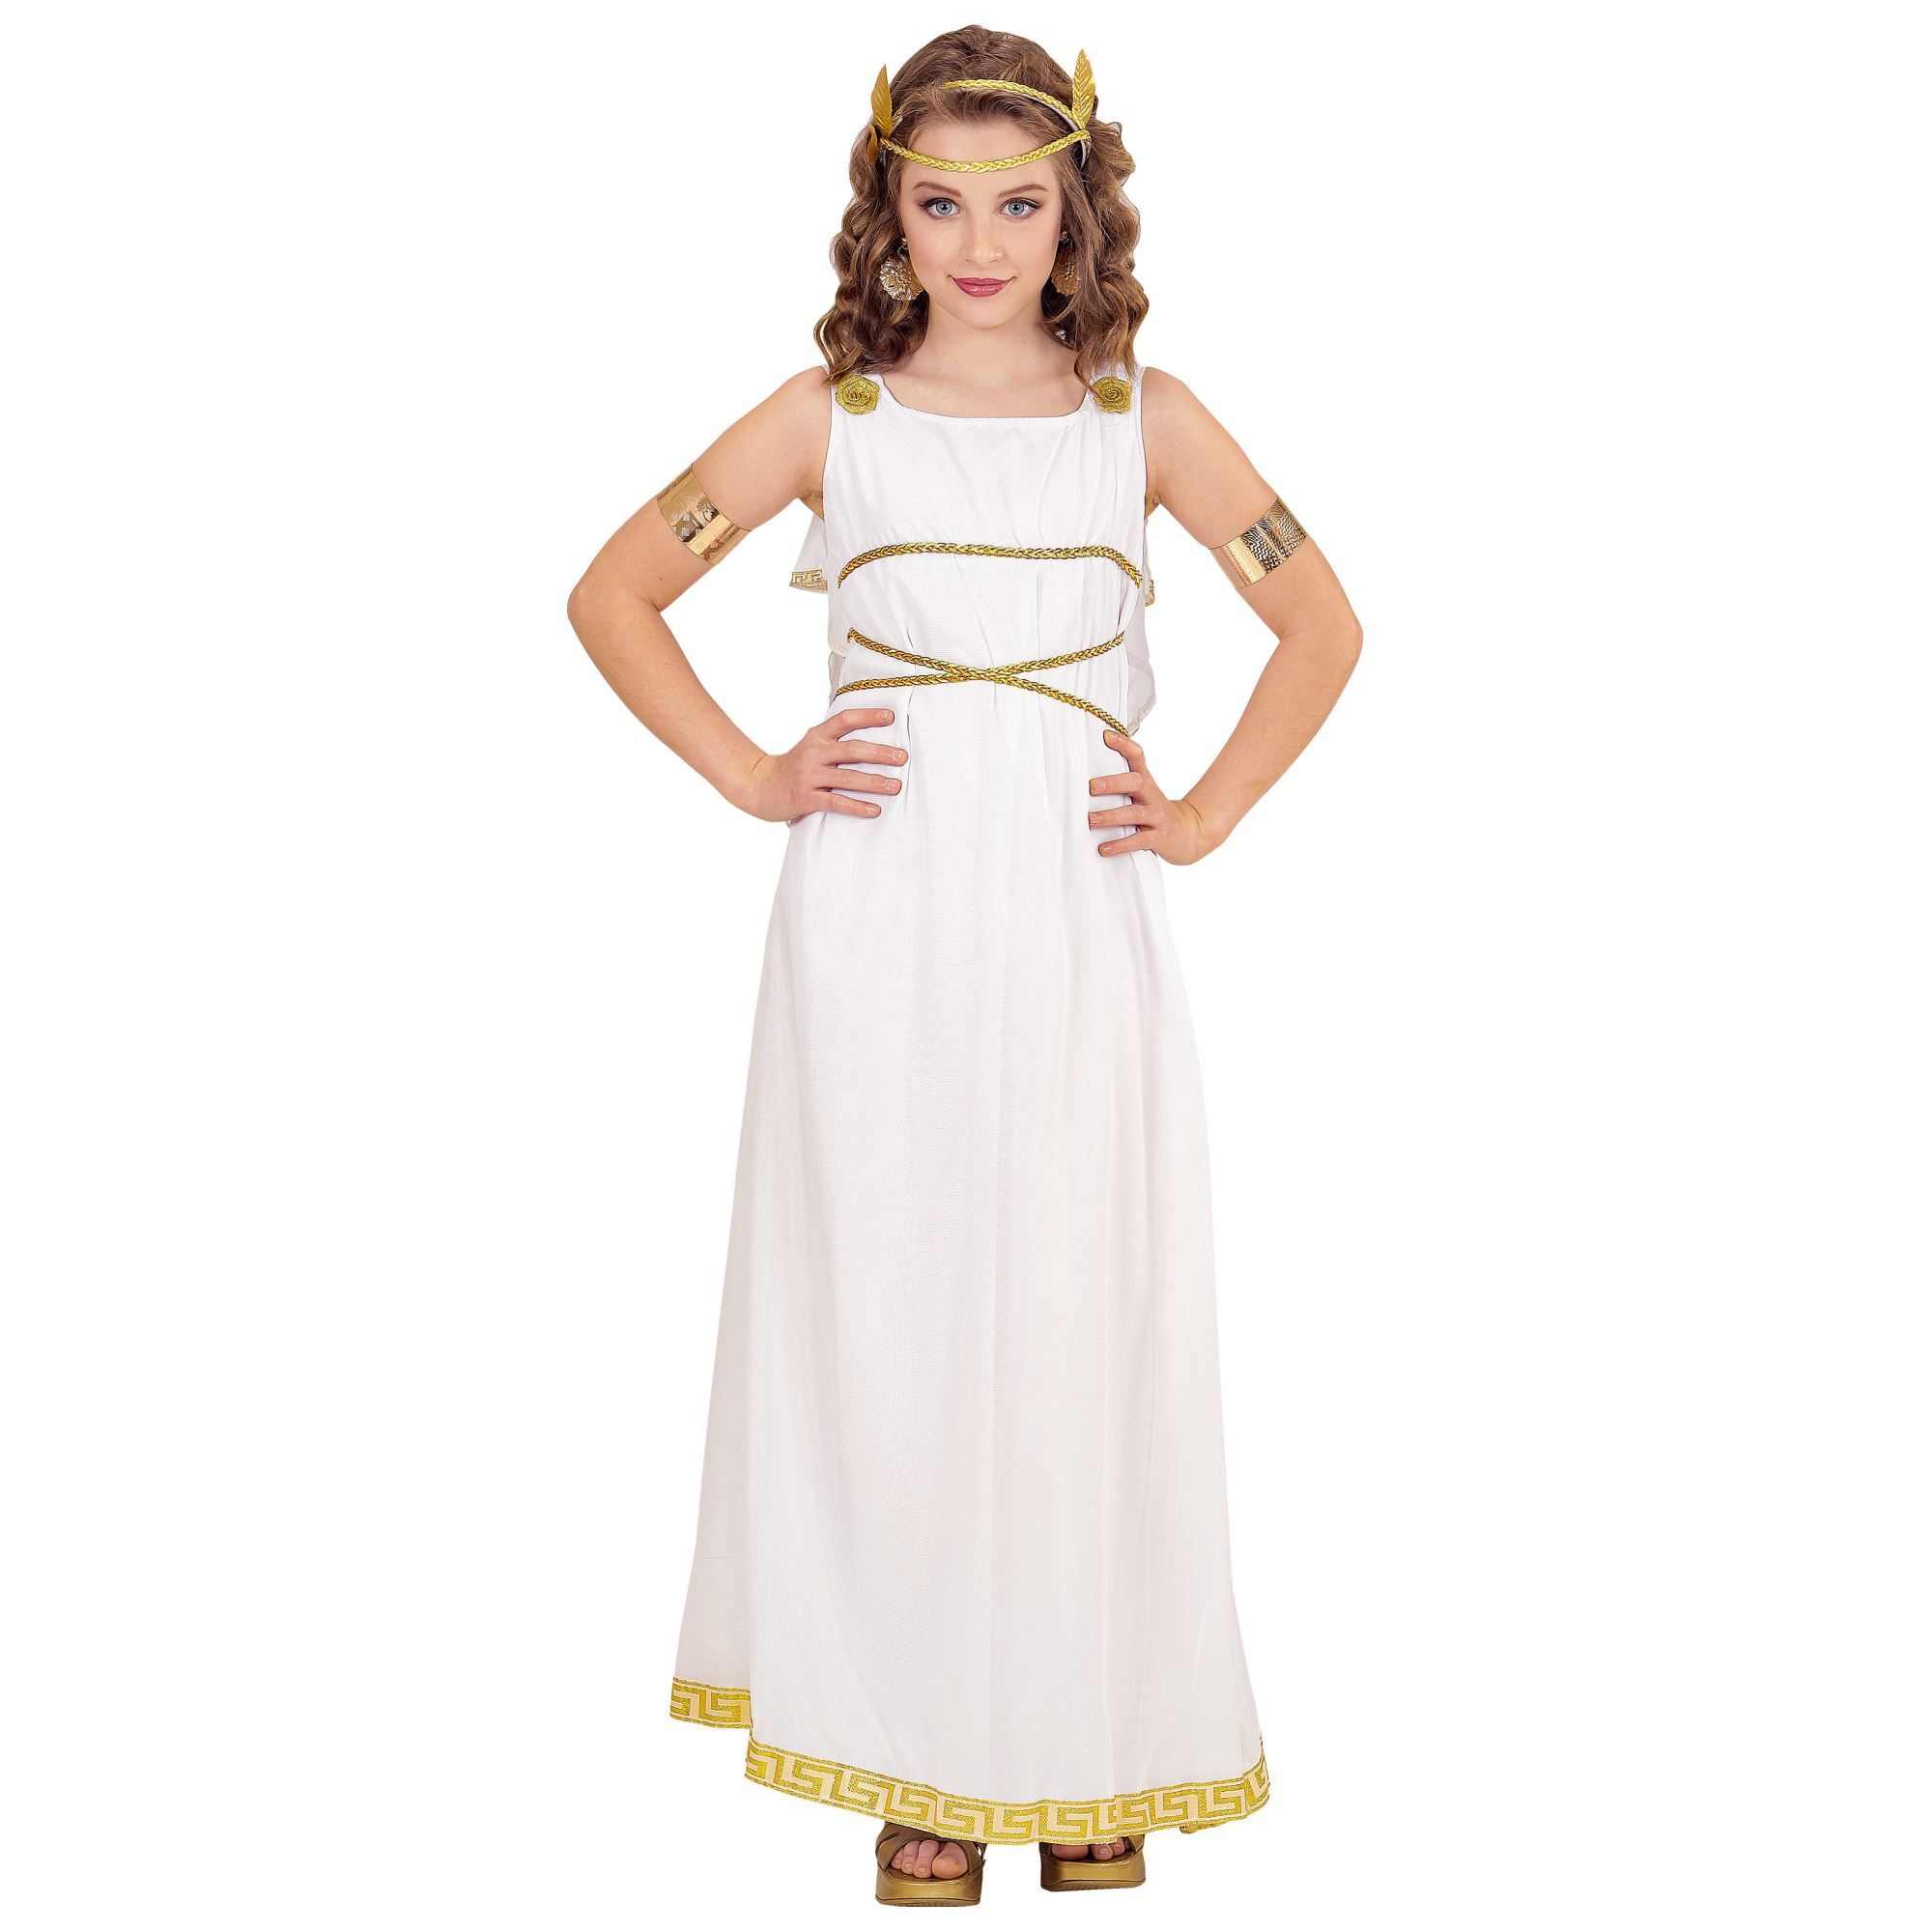 Griekse godin kostuum meisjes jurk